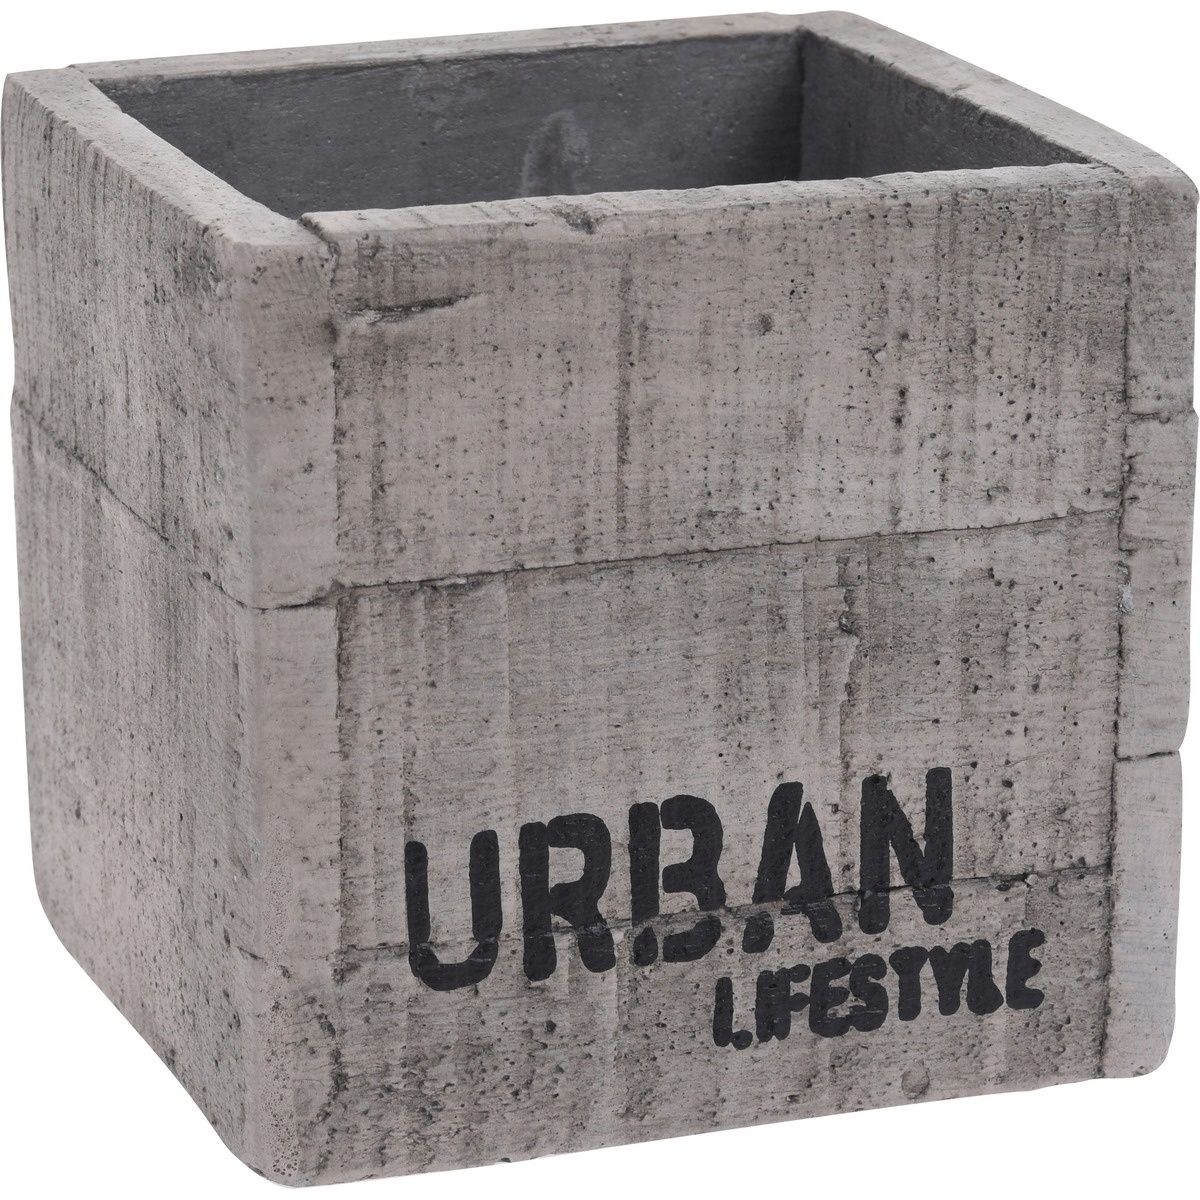 Cementový obal na květináč Urban lifestyle, 12 x 11,5 cm - 4home.cz